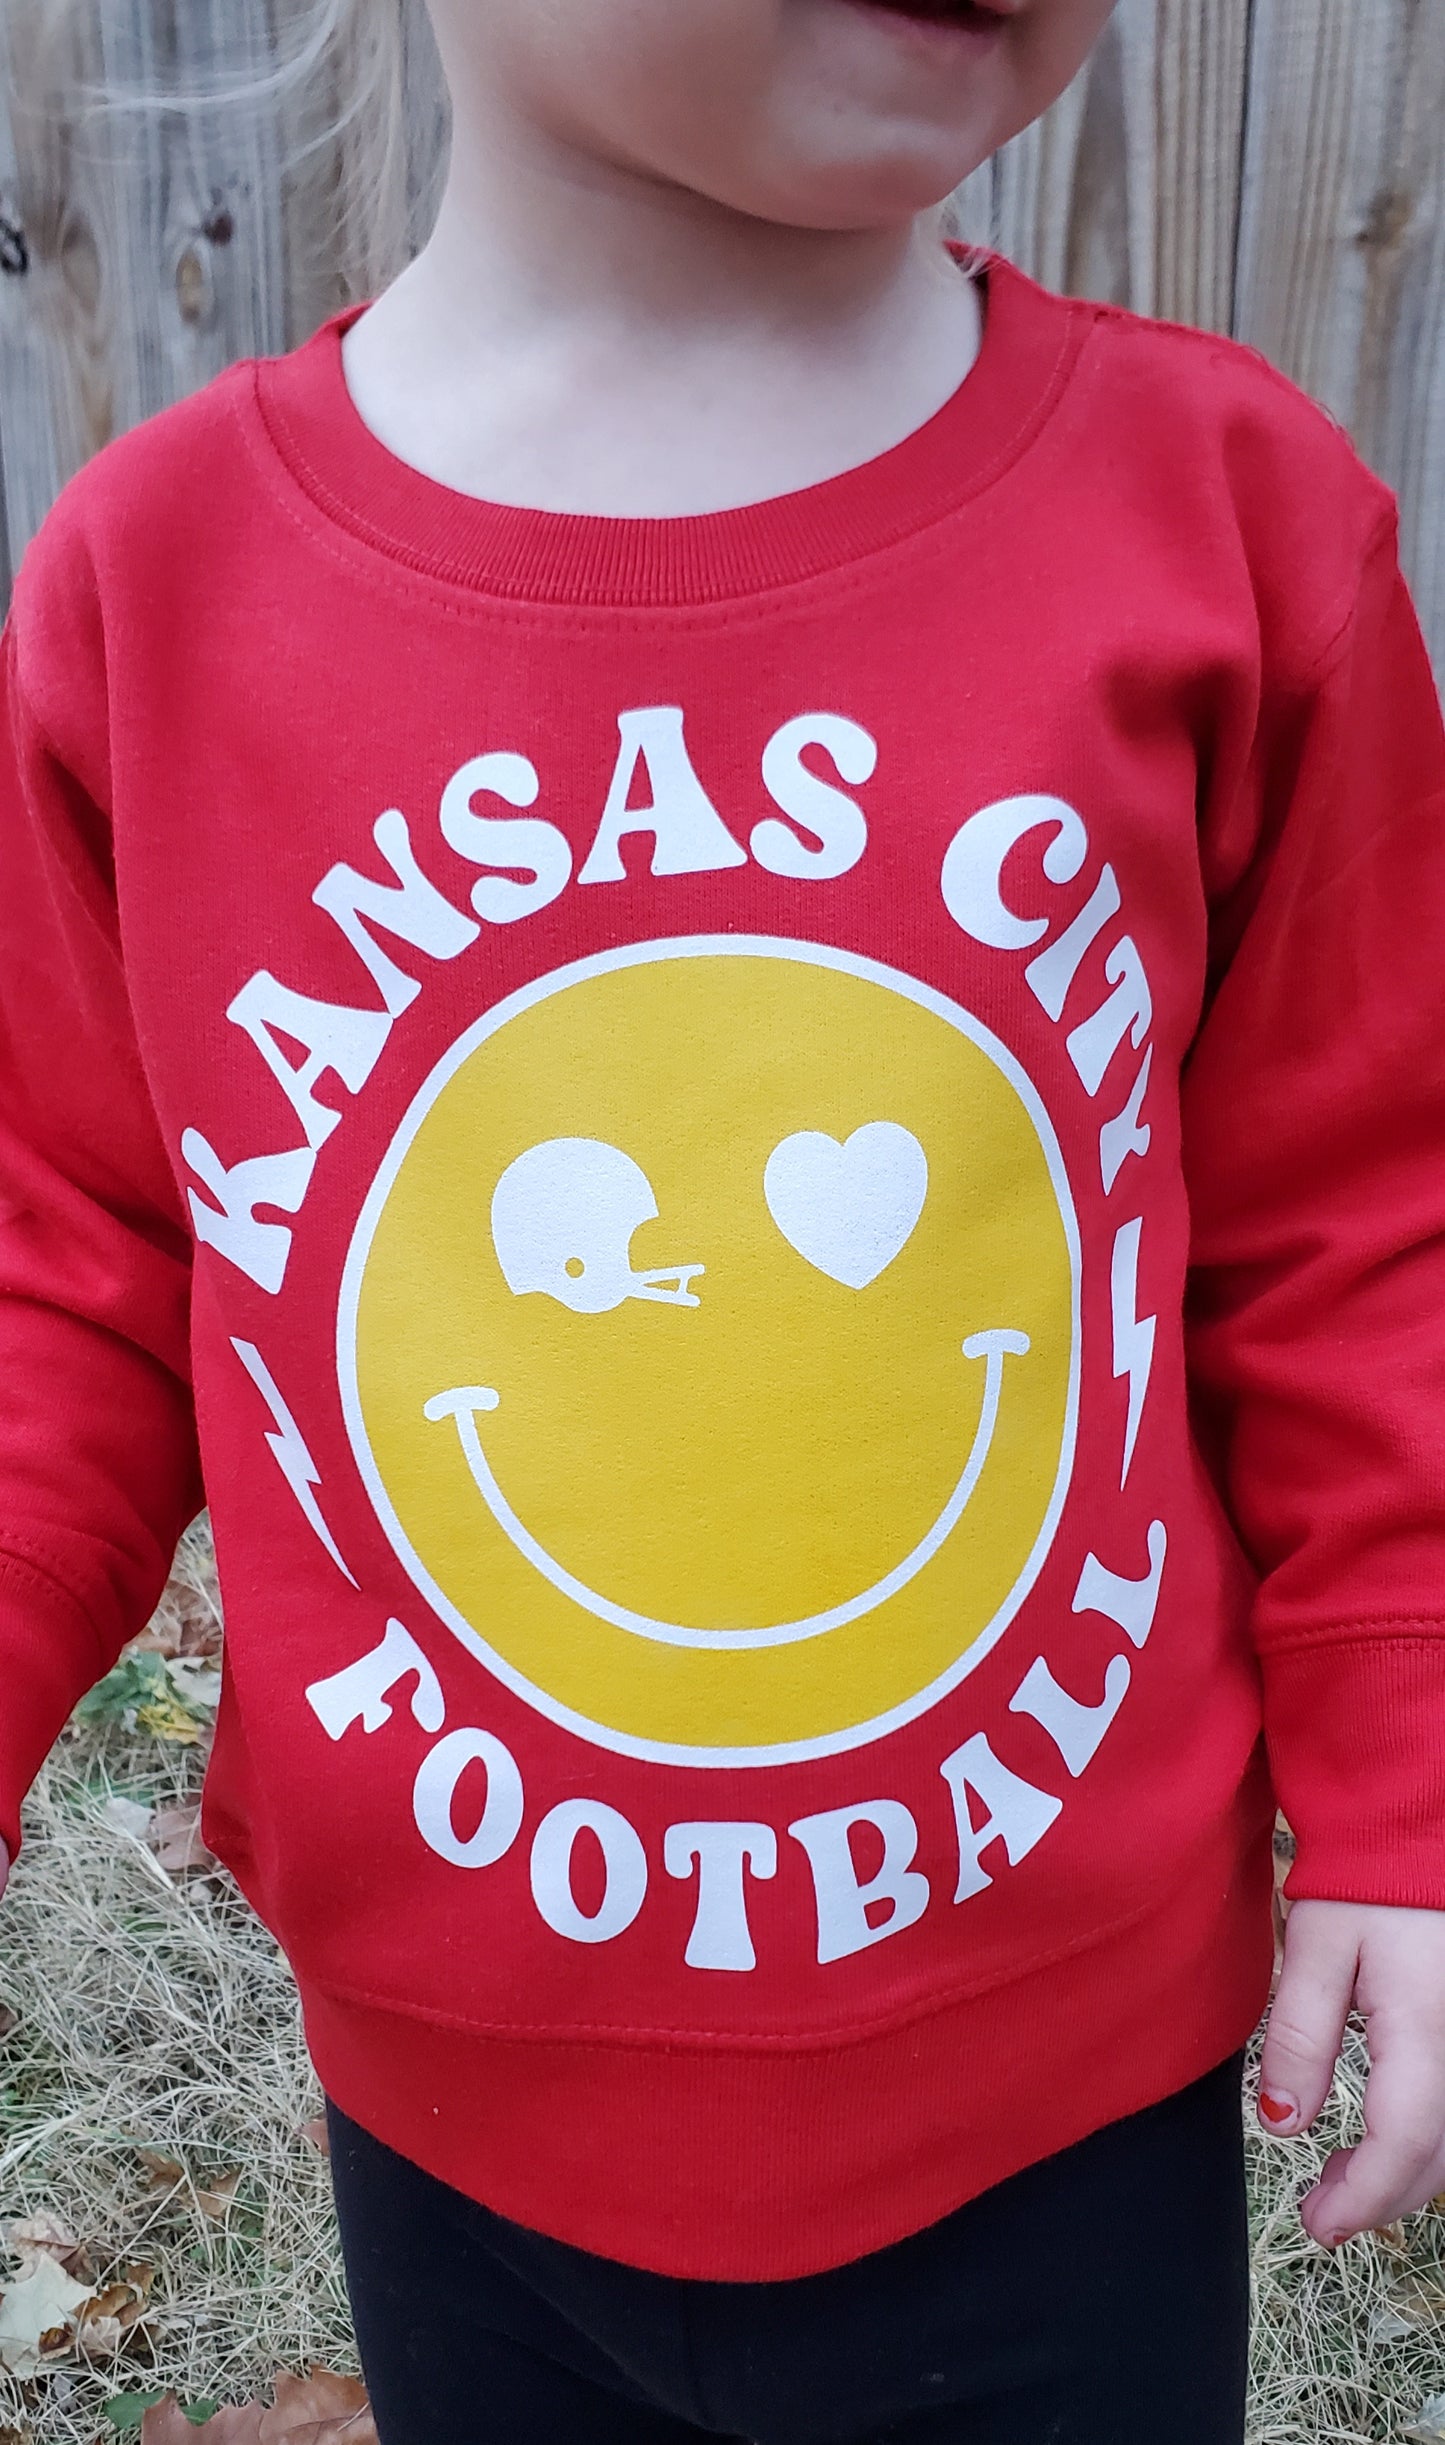 KANSAS CITY FOOTBALL Red Crewneck Sweatshirt (TODDLER)